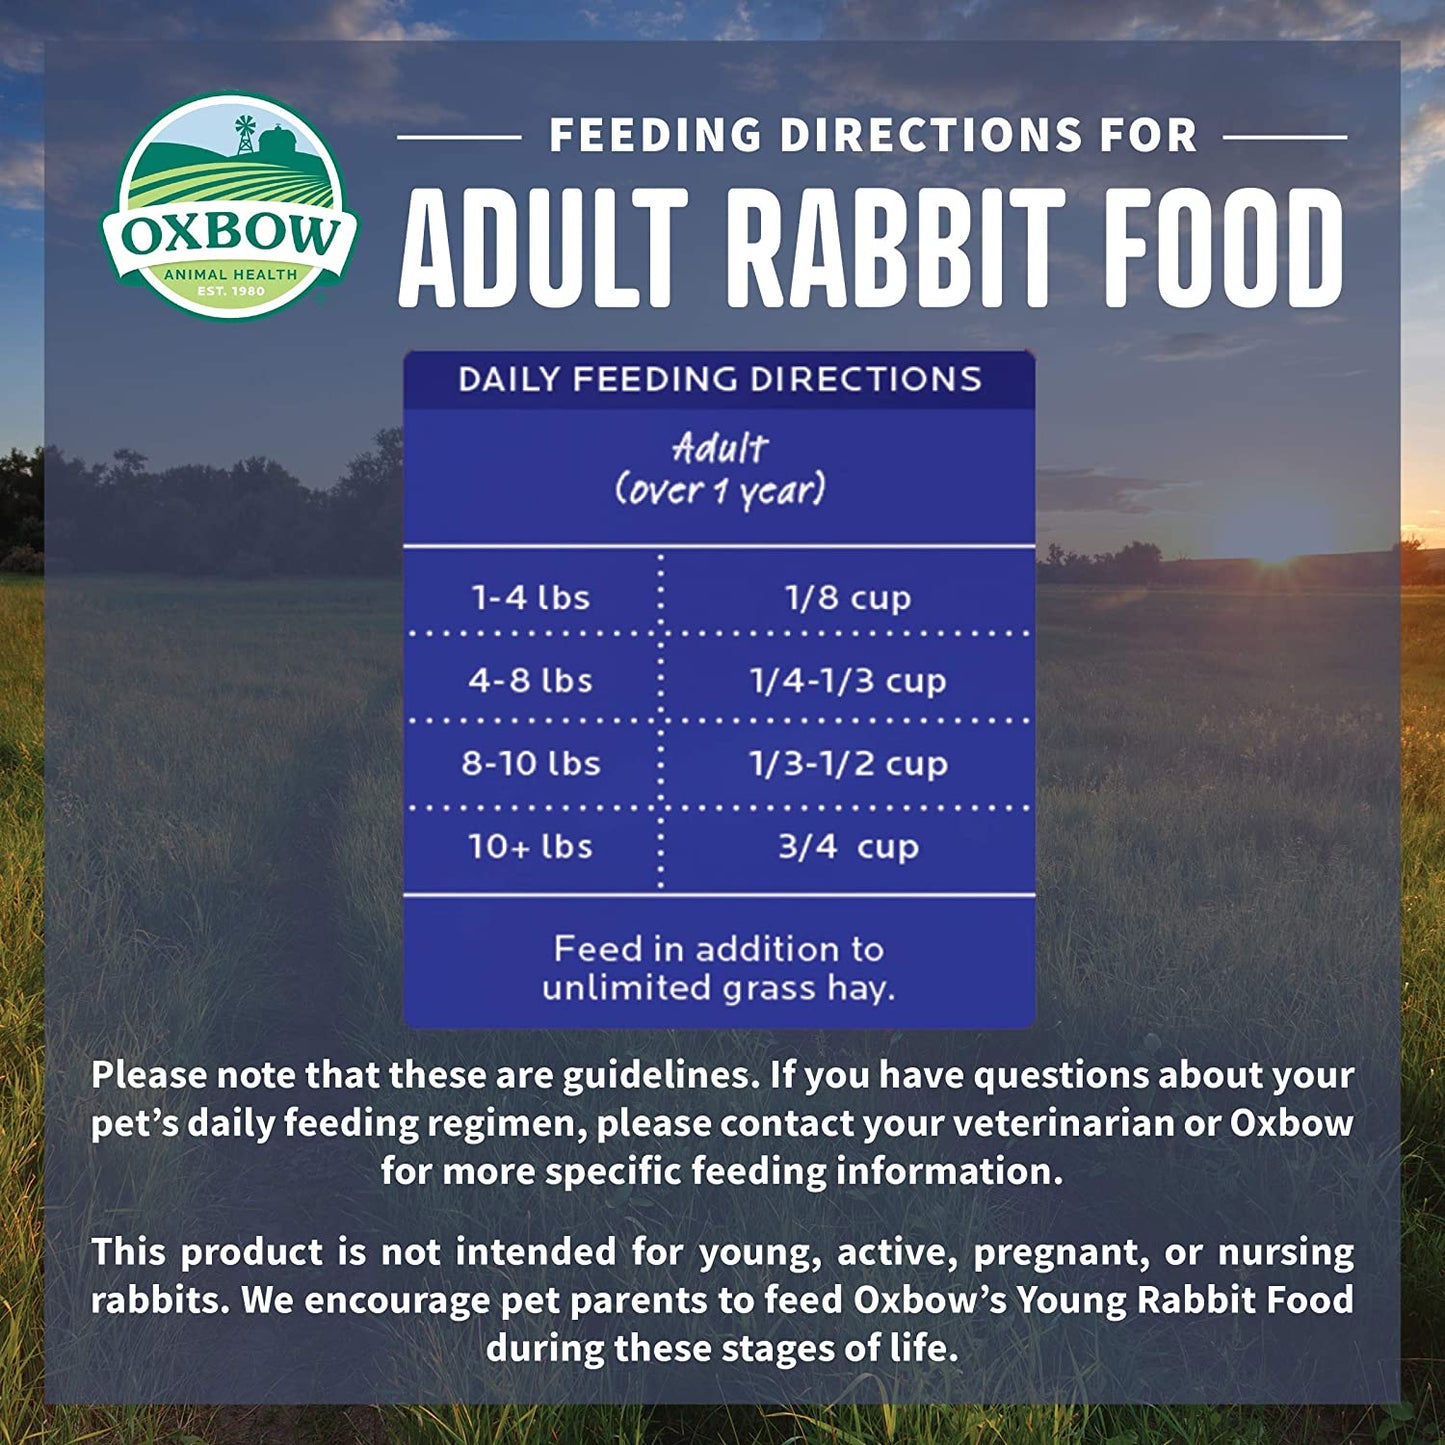 Oxbow Essentials Adult Rabbit Food  Small Animal Food Dry  | PetMax Canada